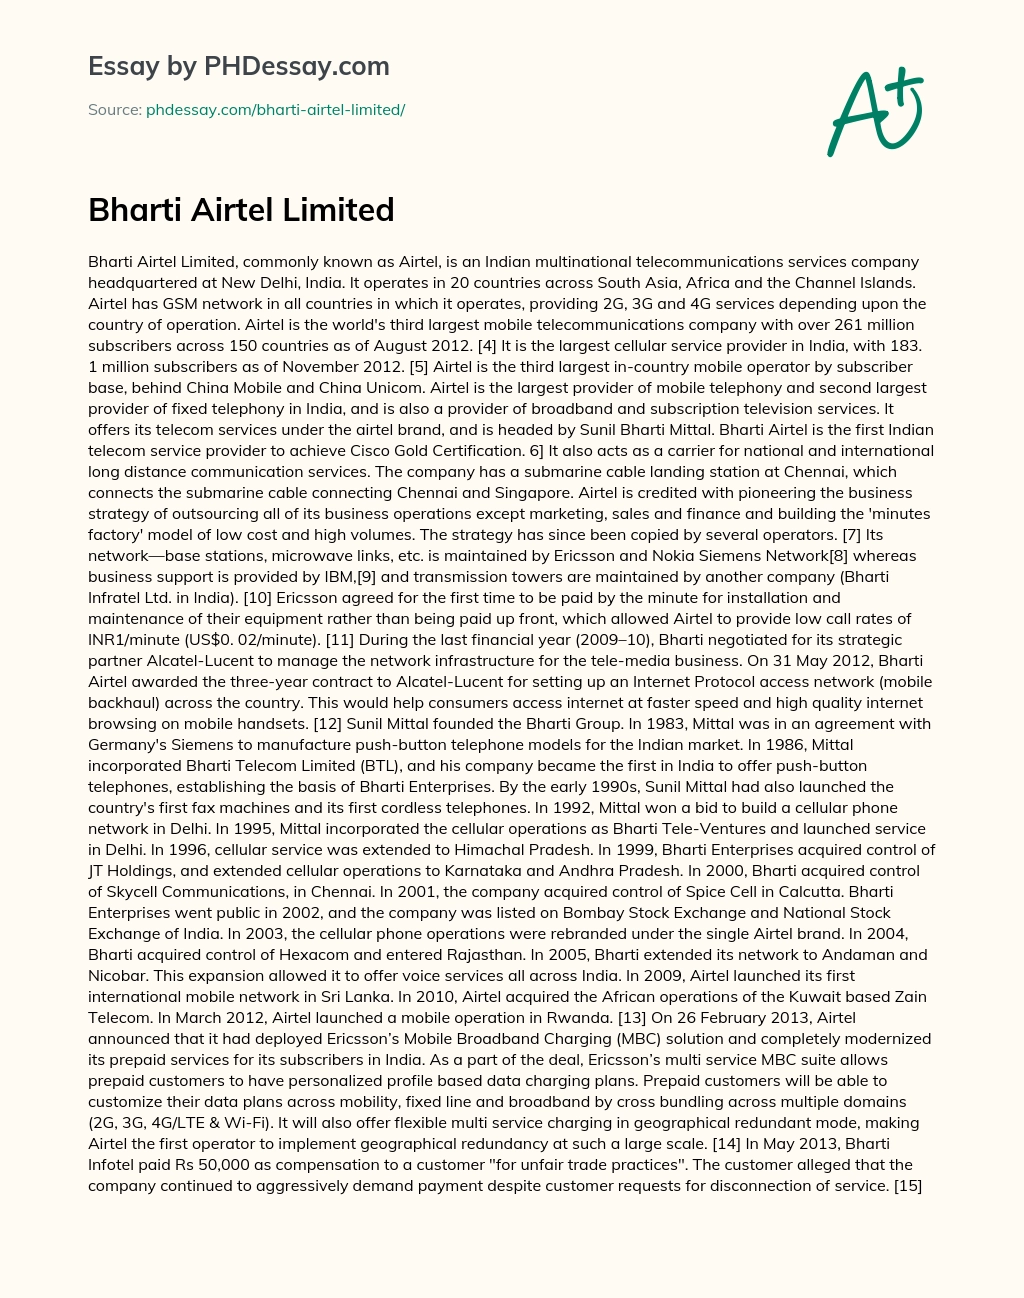 Bharti Airtel Limited essay